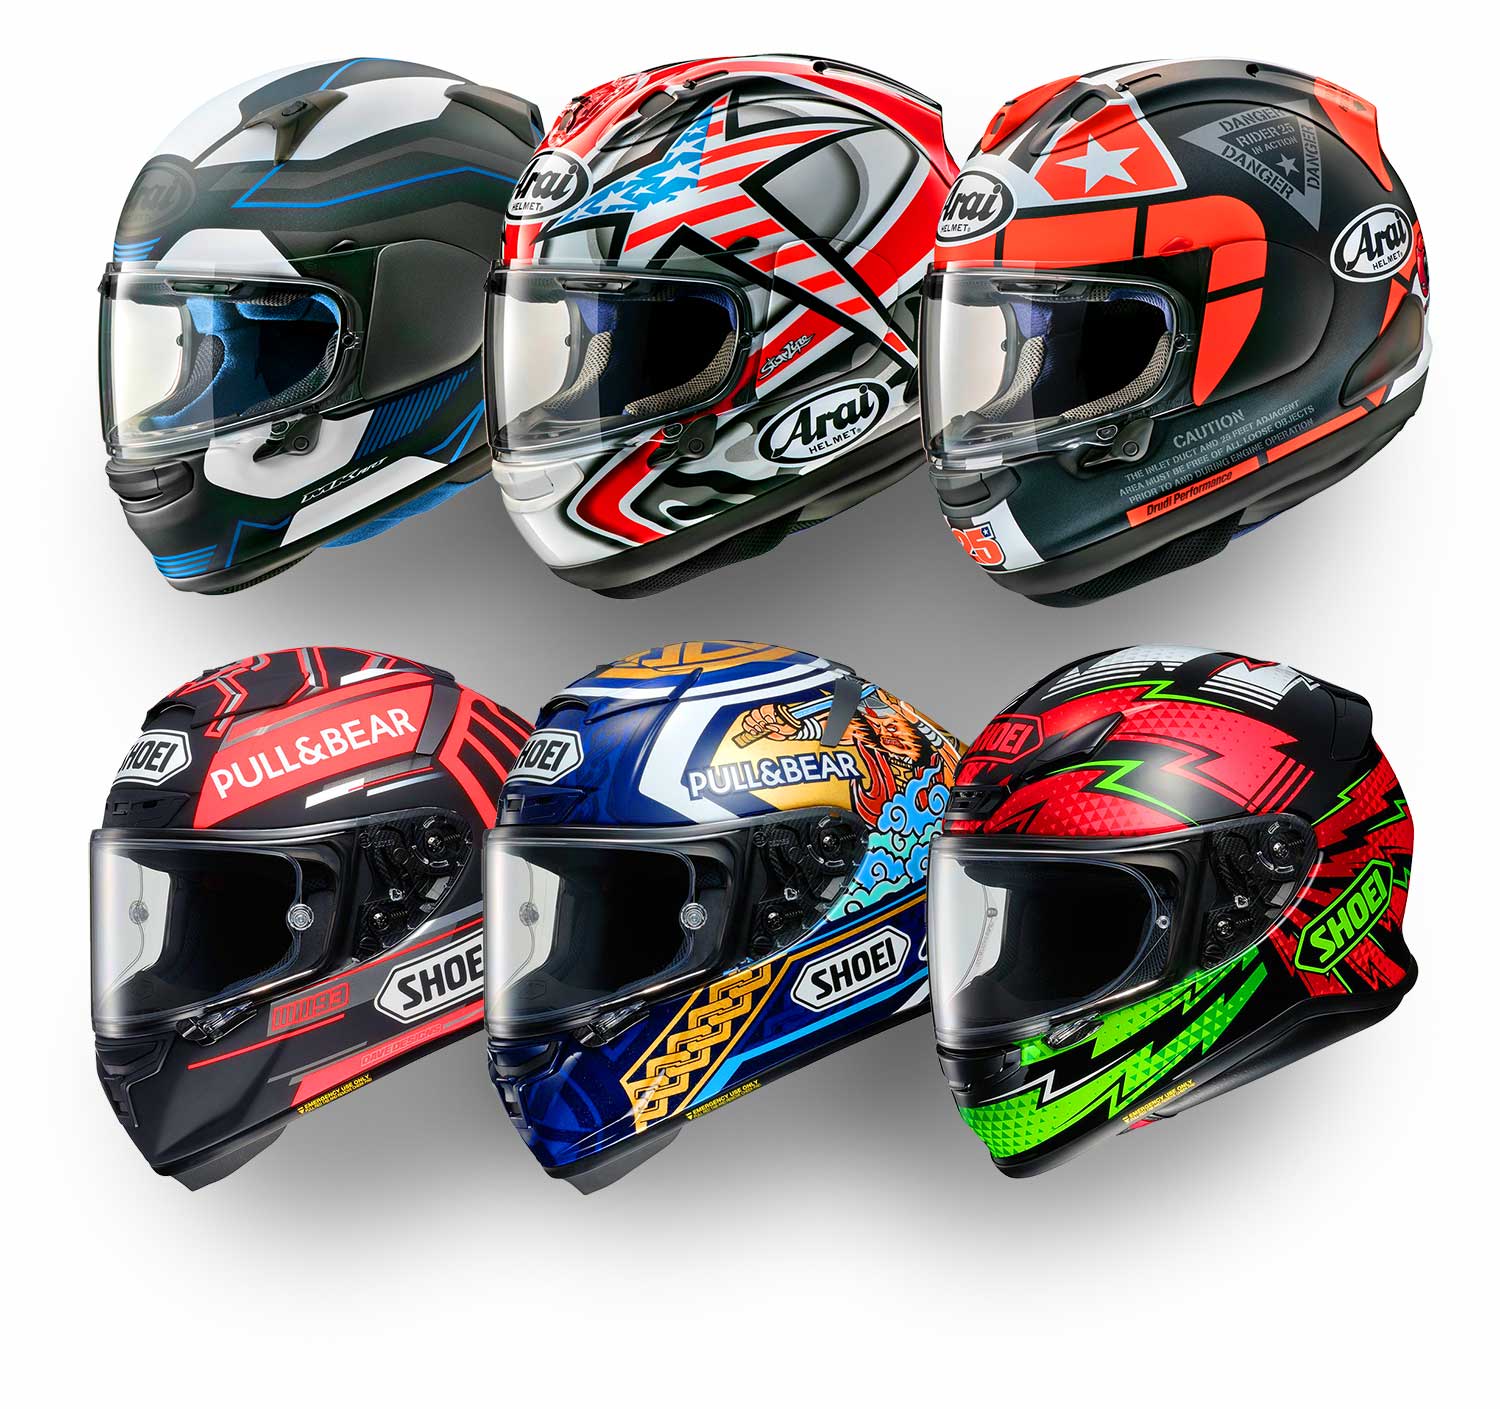 Two rows of three helmets each with Arai helmets on top and Shoei helmets on bottom